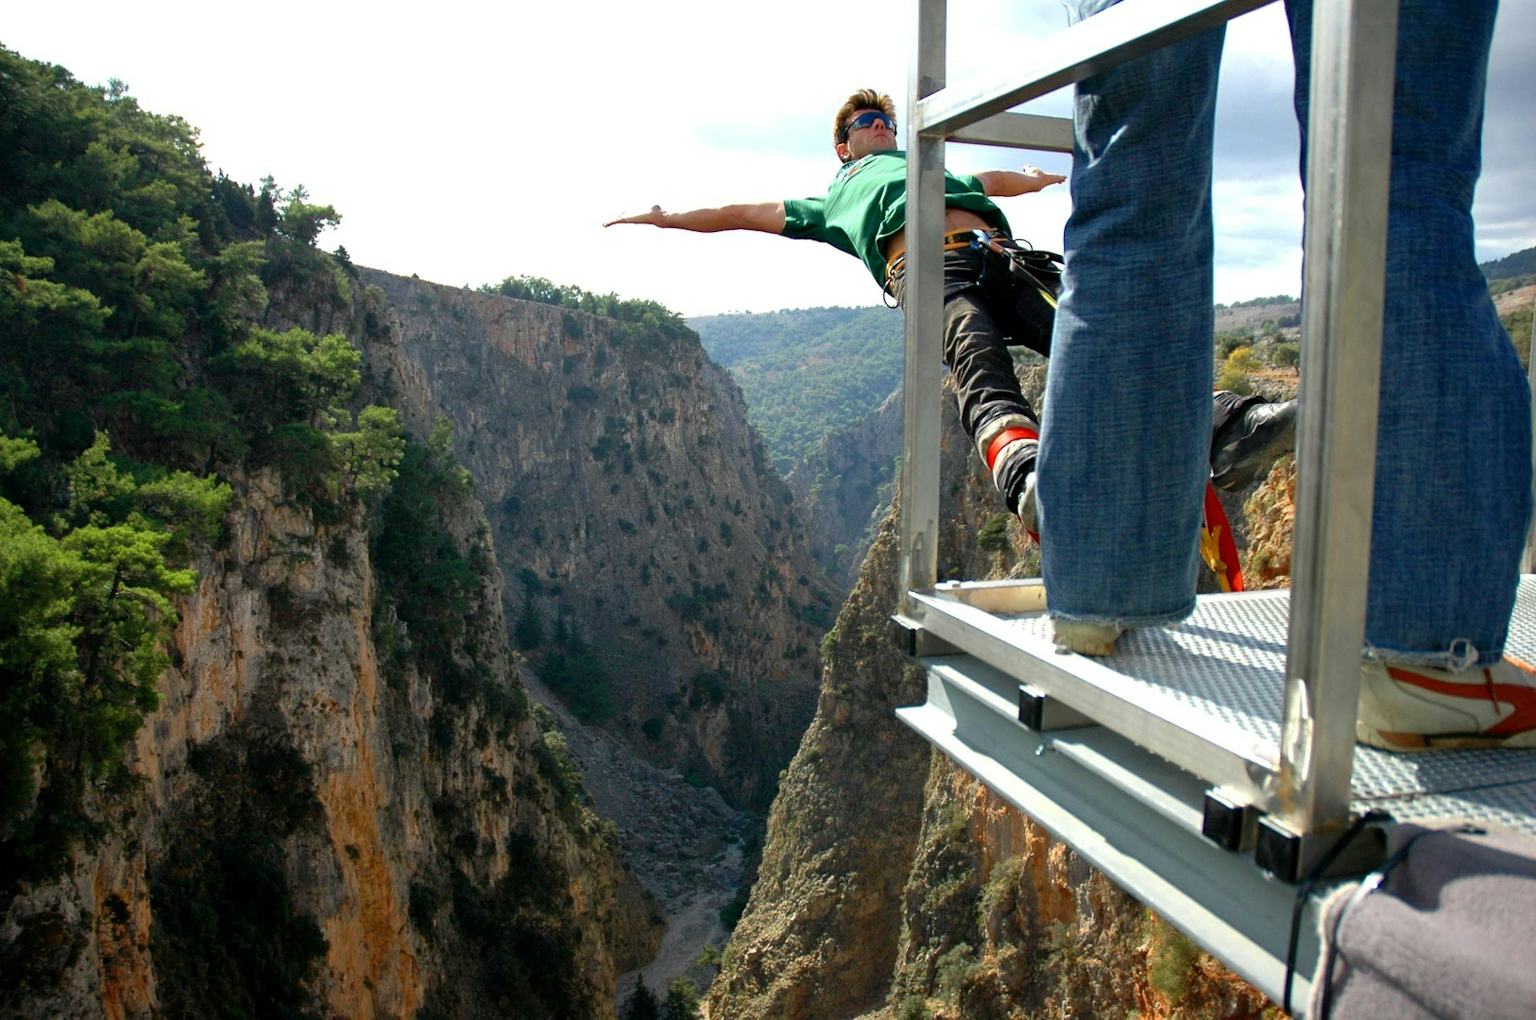 Bungee Jumping Thrills at Aradena: Adrenaline, Views, and Memories